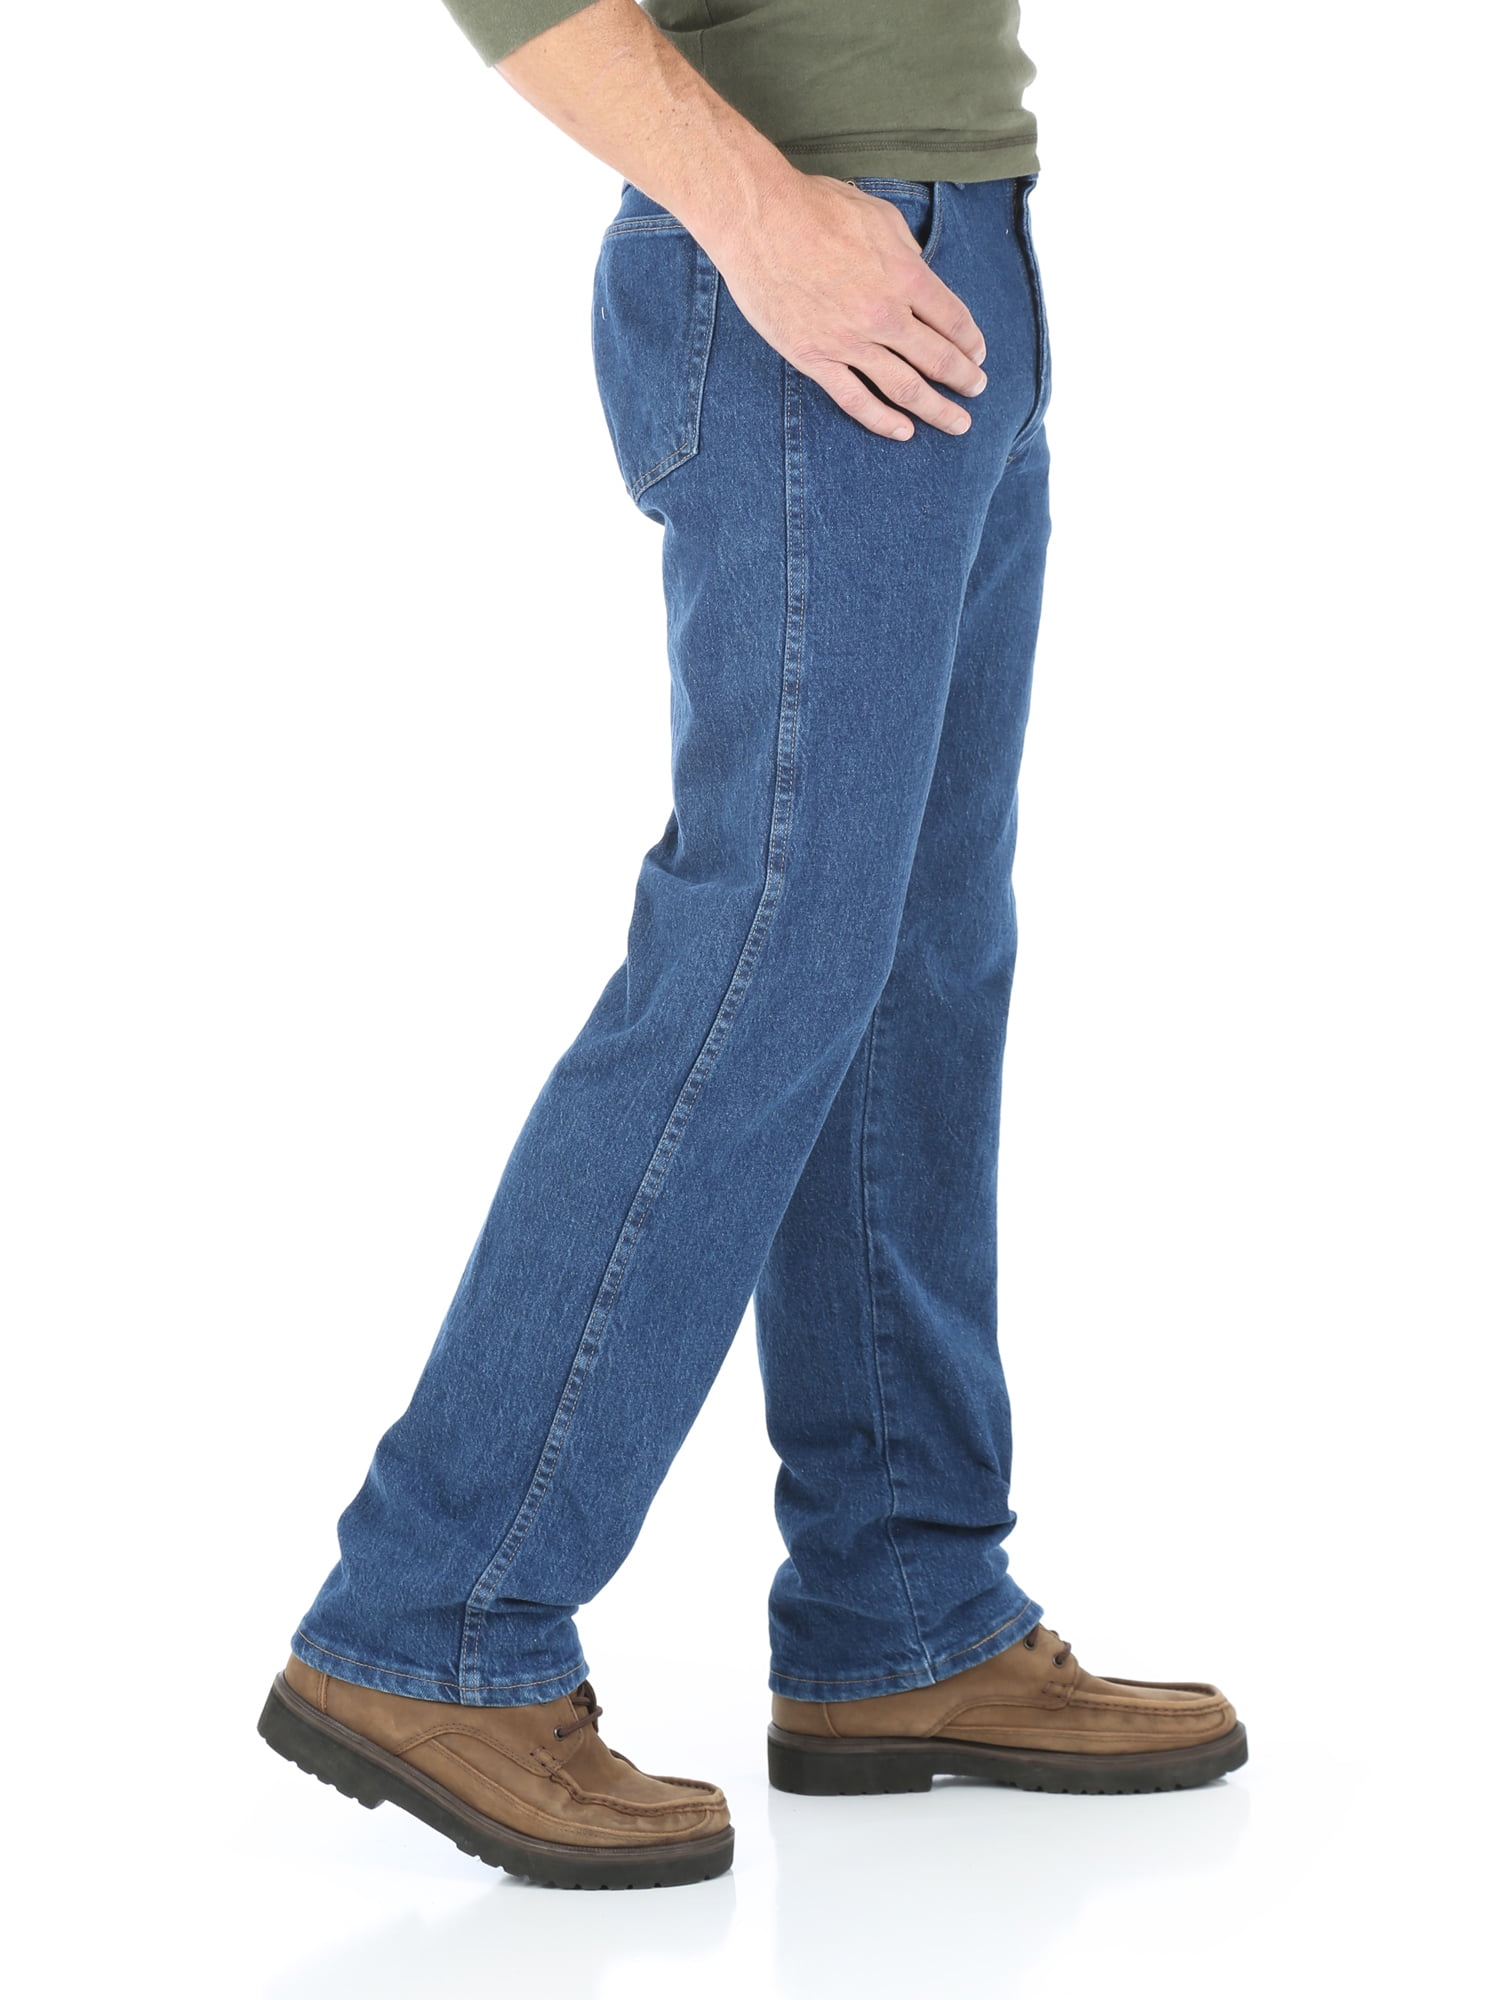 walmart flex jeans